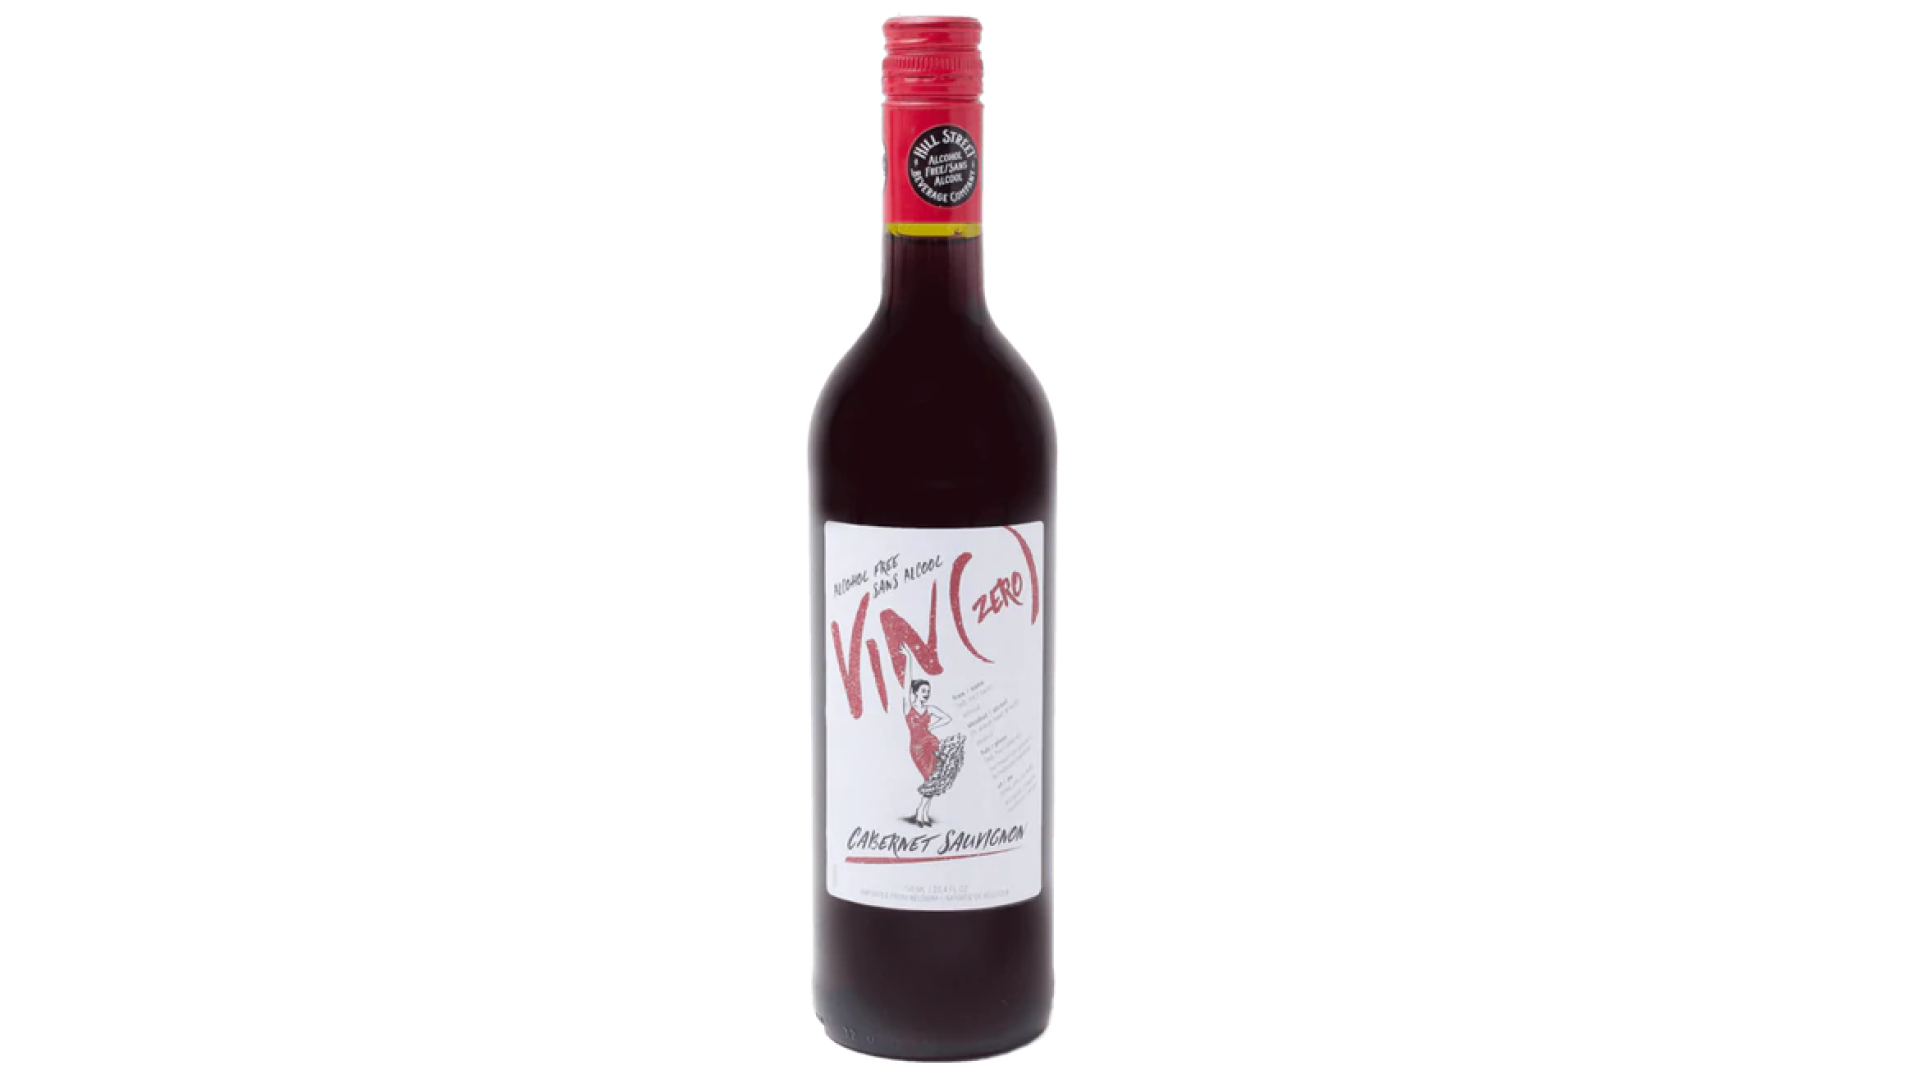 A bottle of Hill Street Vin (Zero) non-alcoholic cabernet